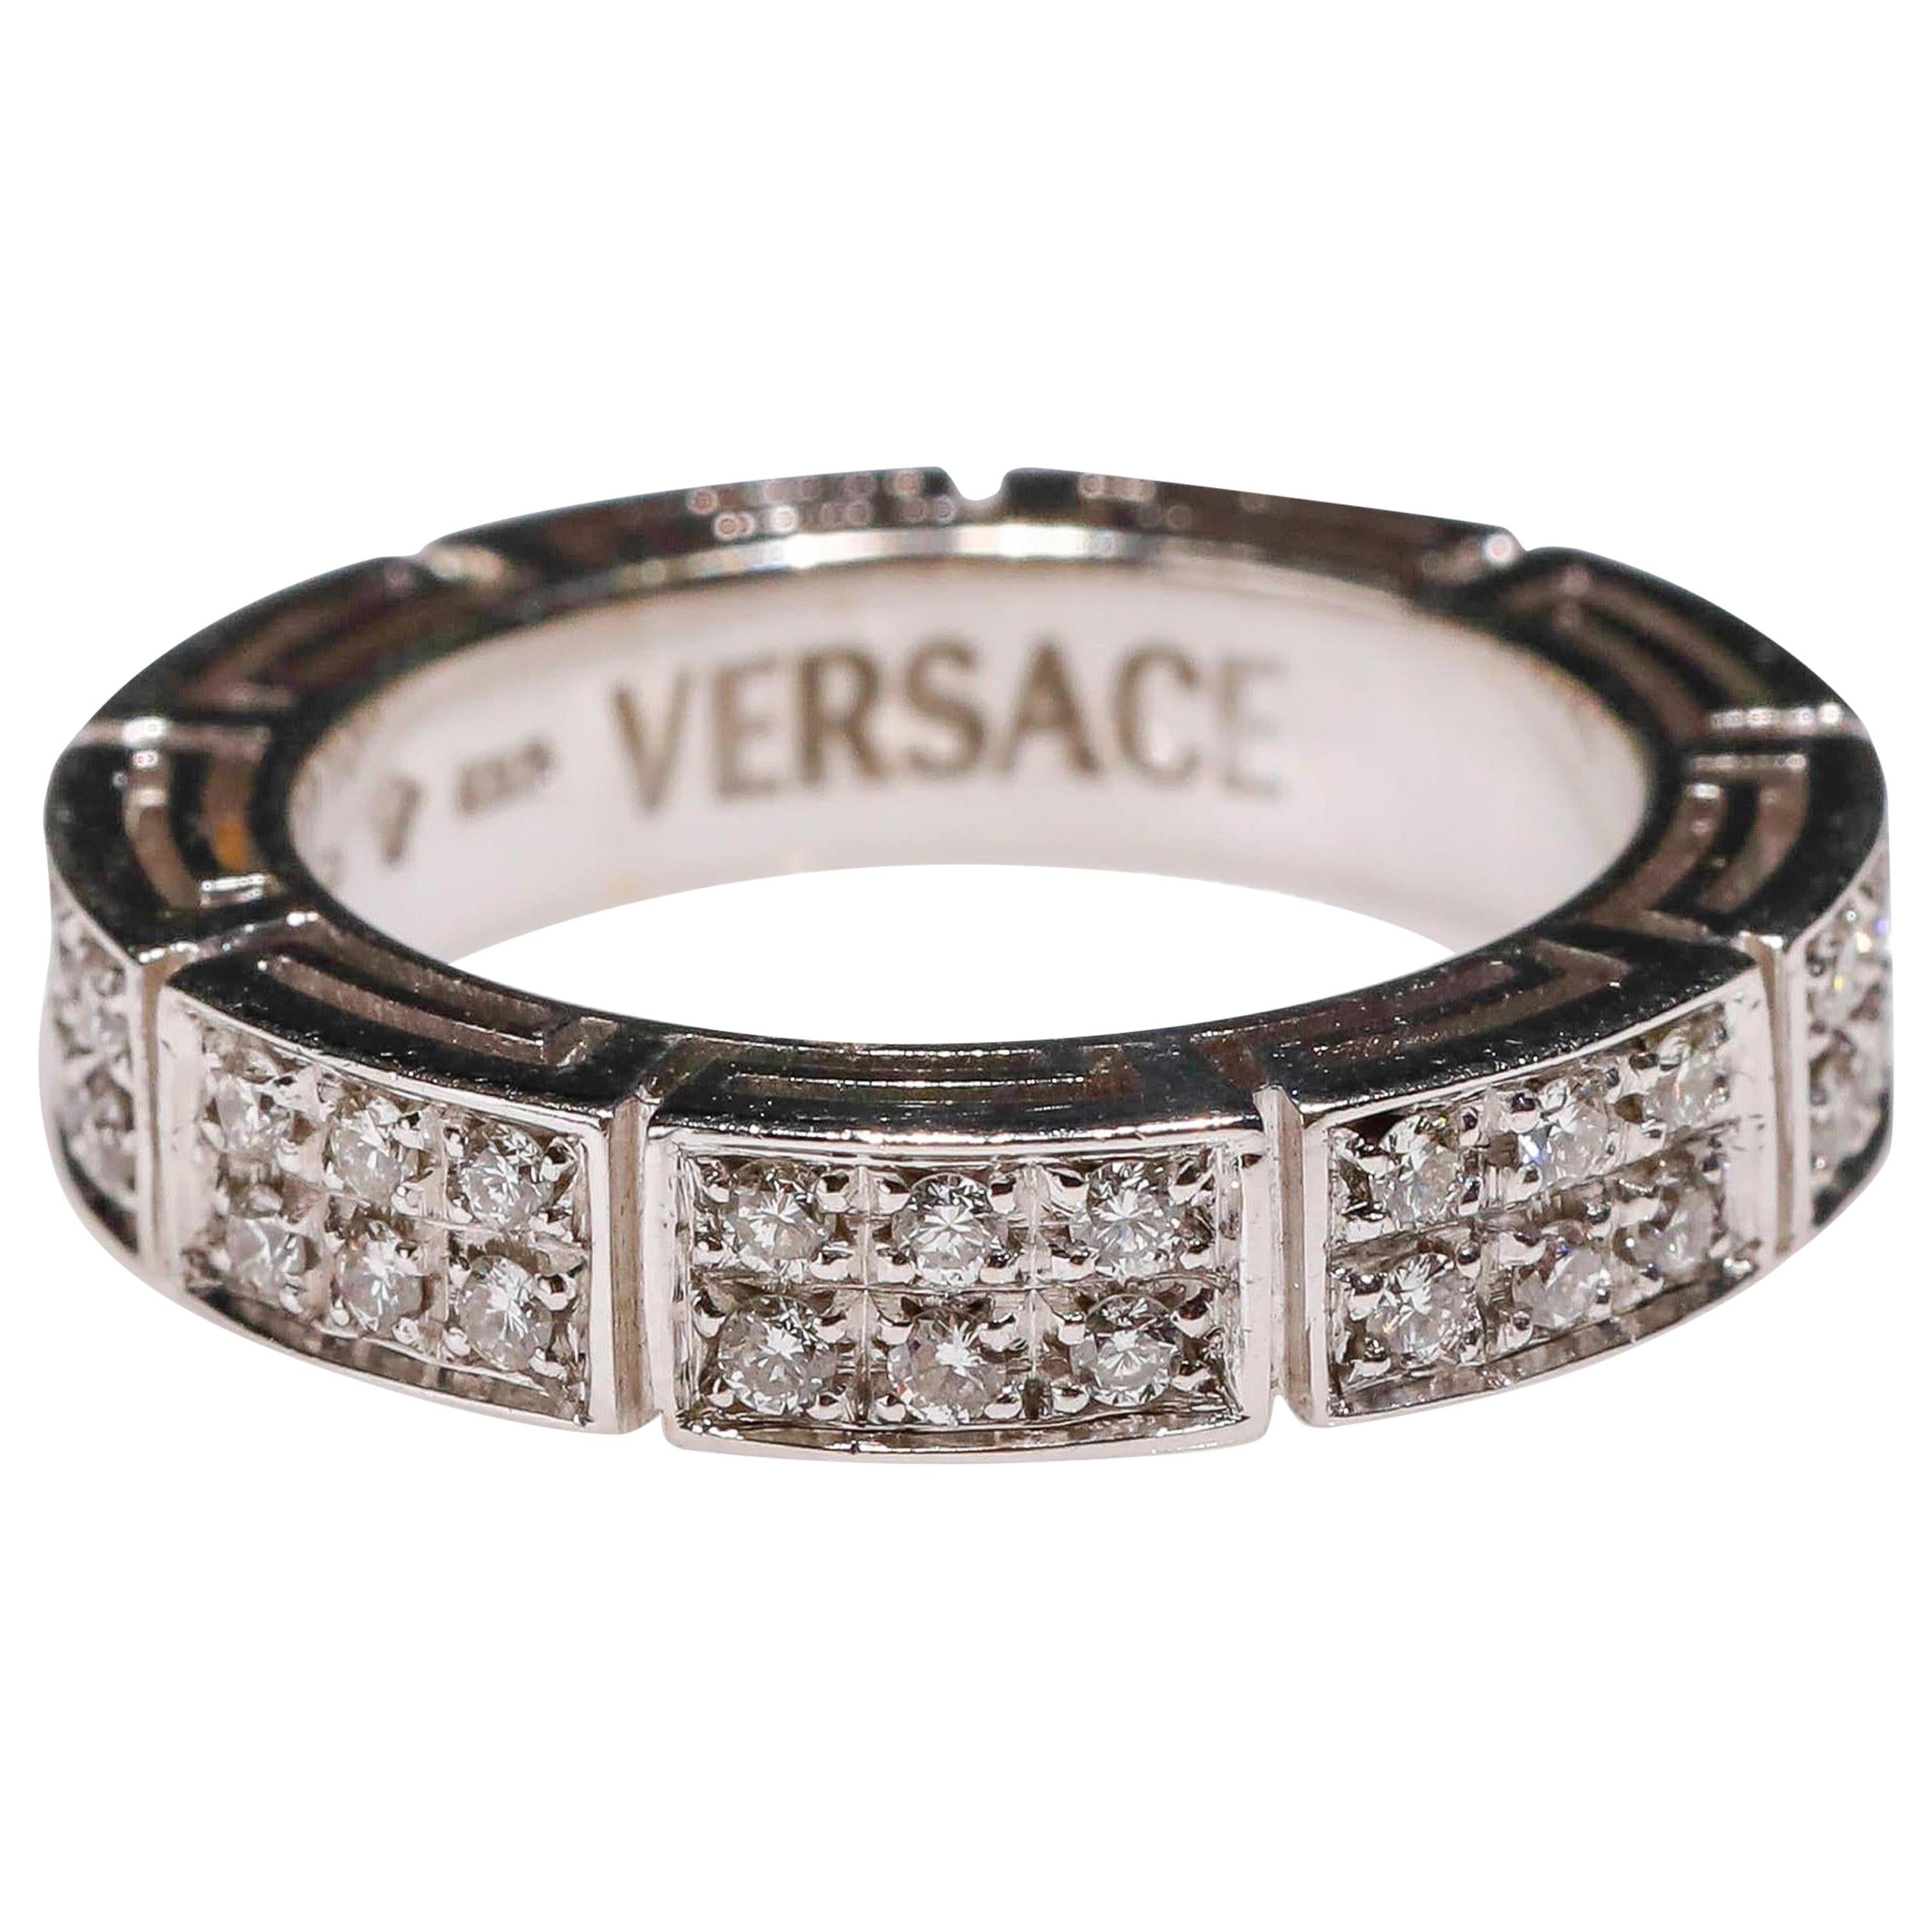 versace ring band